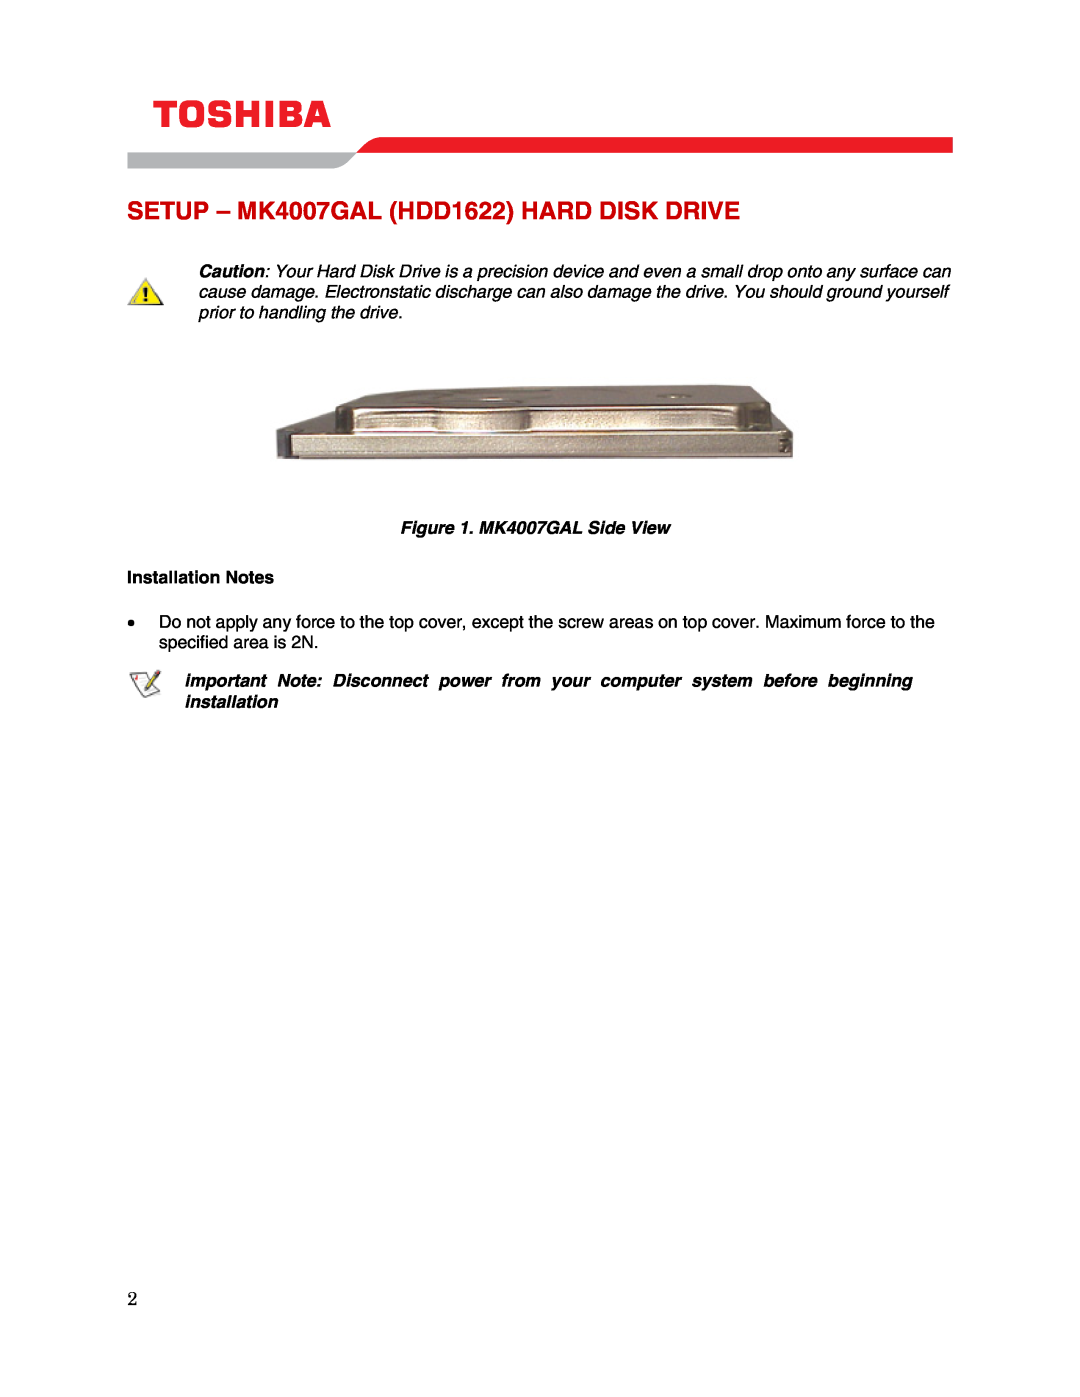 Toshiba user manual SETUP - MK4007GAL HDD1622 HARD DISK DRIVE, MK4007GAL Side View, Installation Notes 